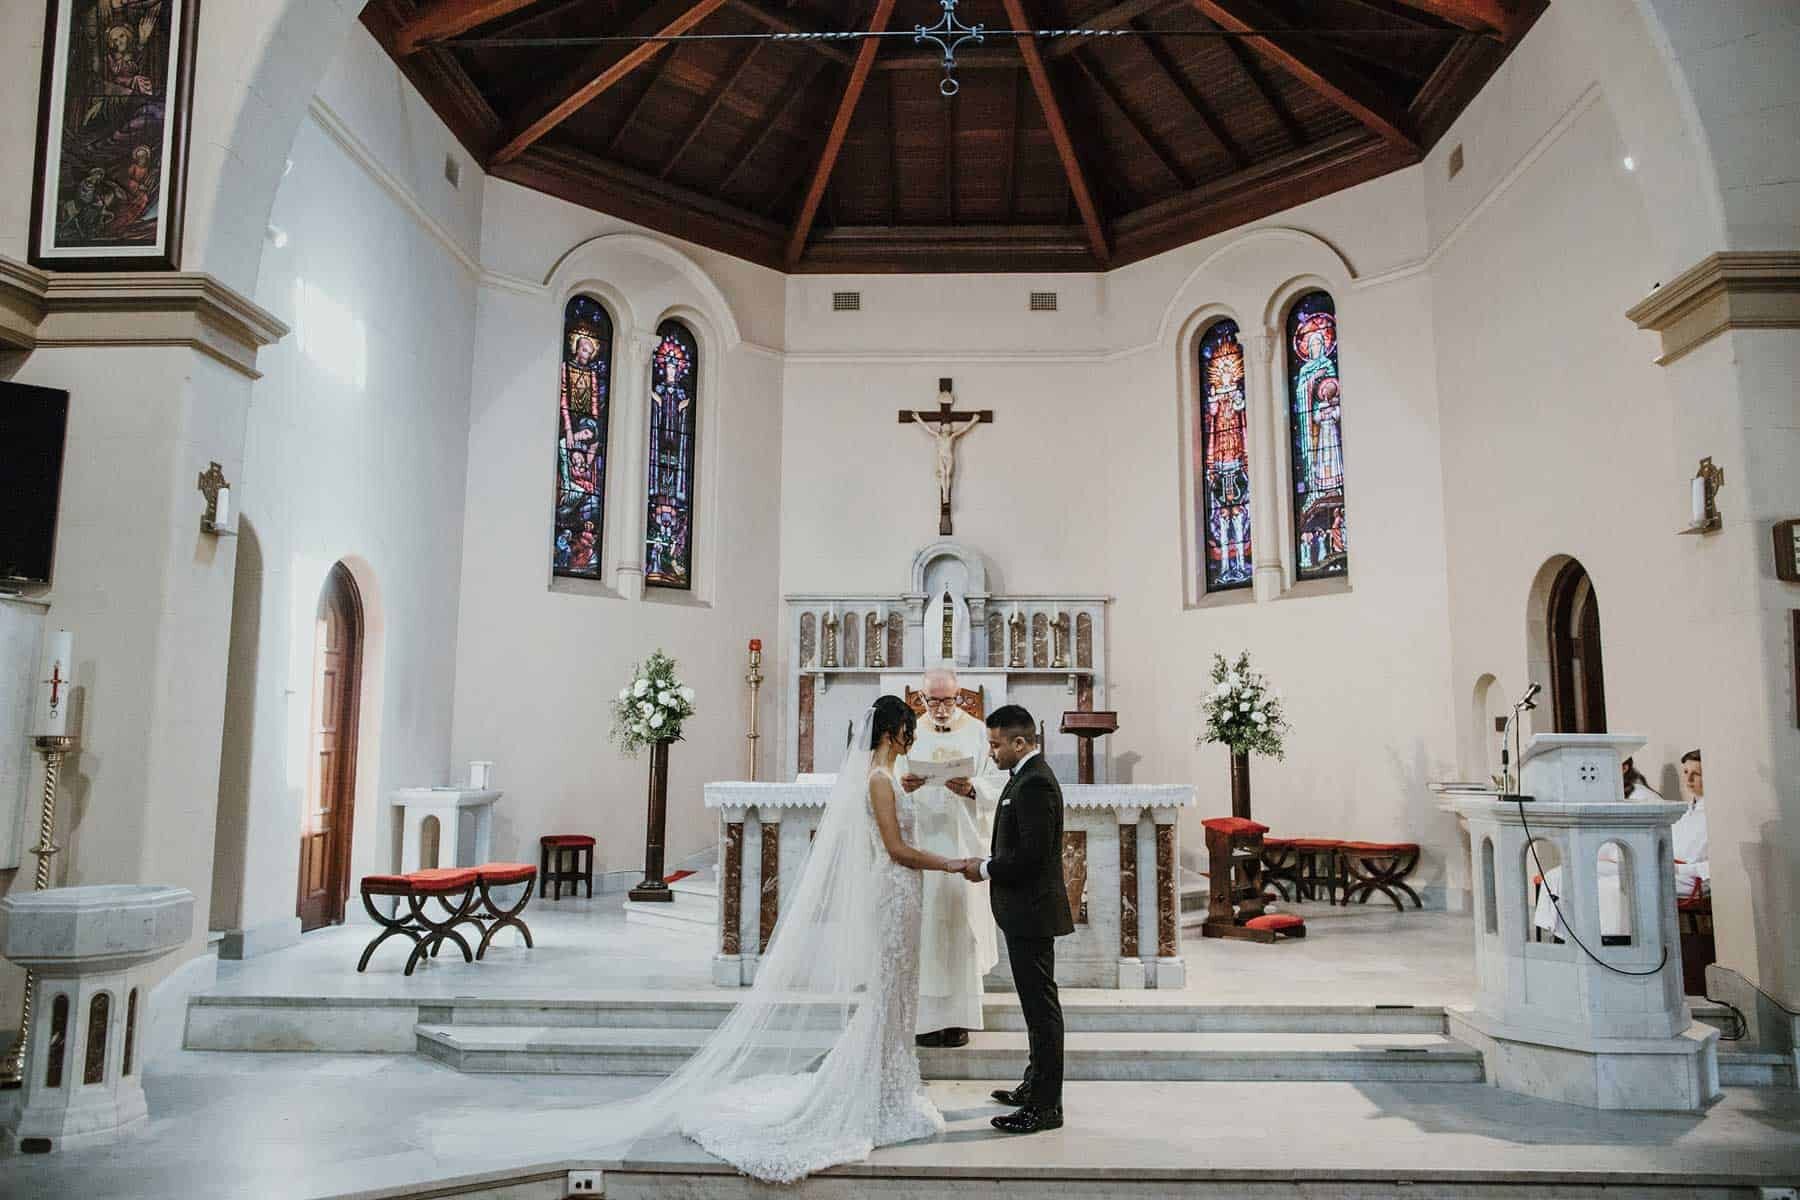 Perth traditional Catholic church wedding